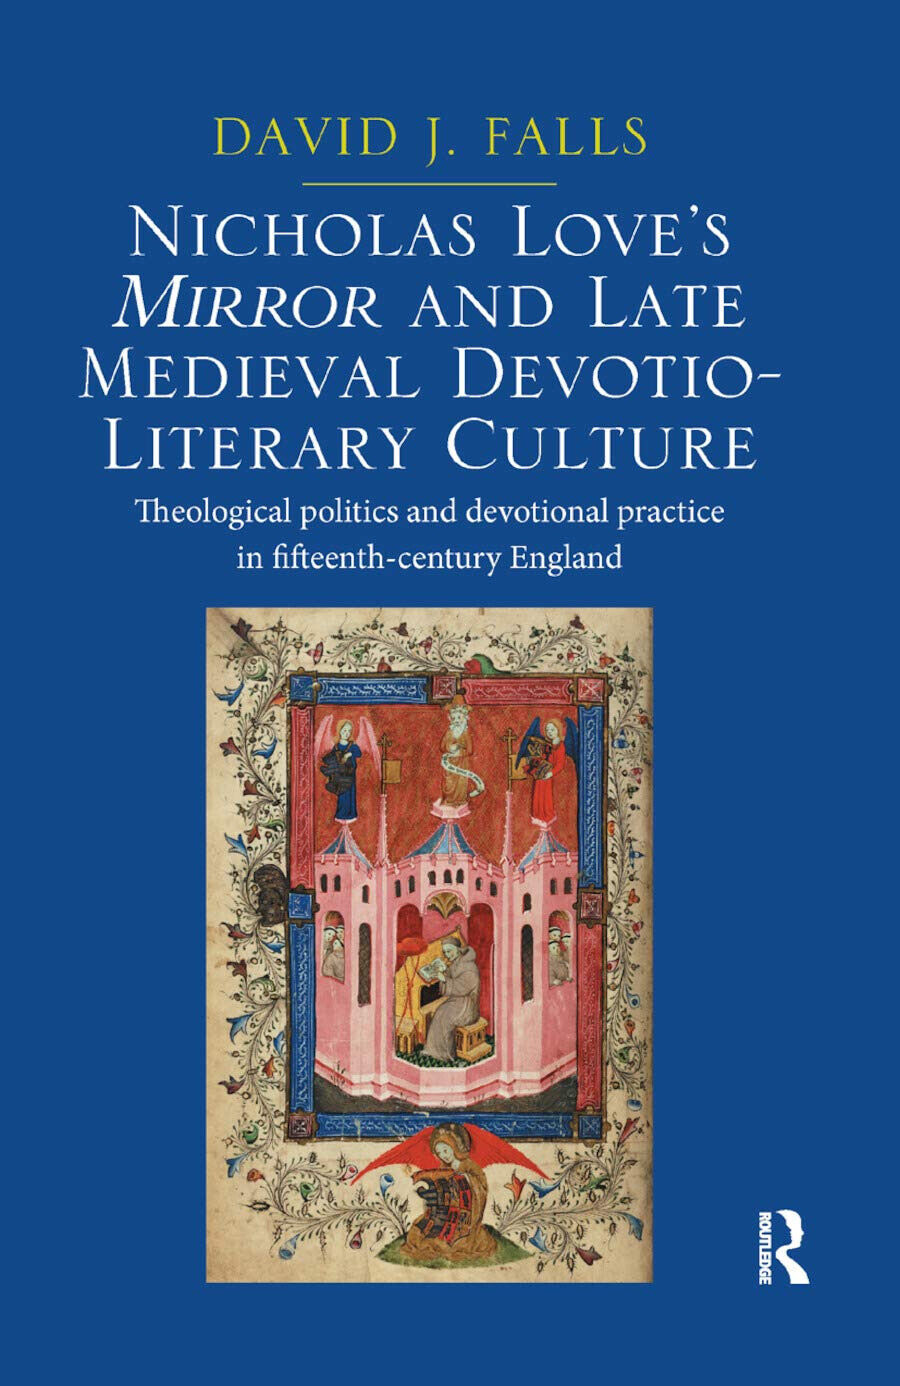 Nicholas Love's Mirror And Late Medieval Devotio-literary Culture - 2019